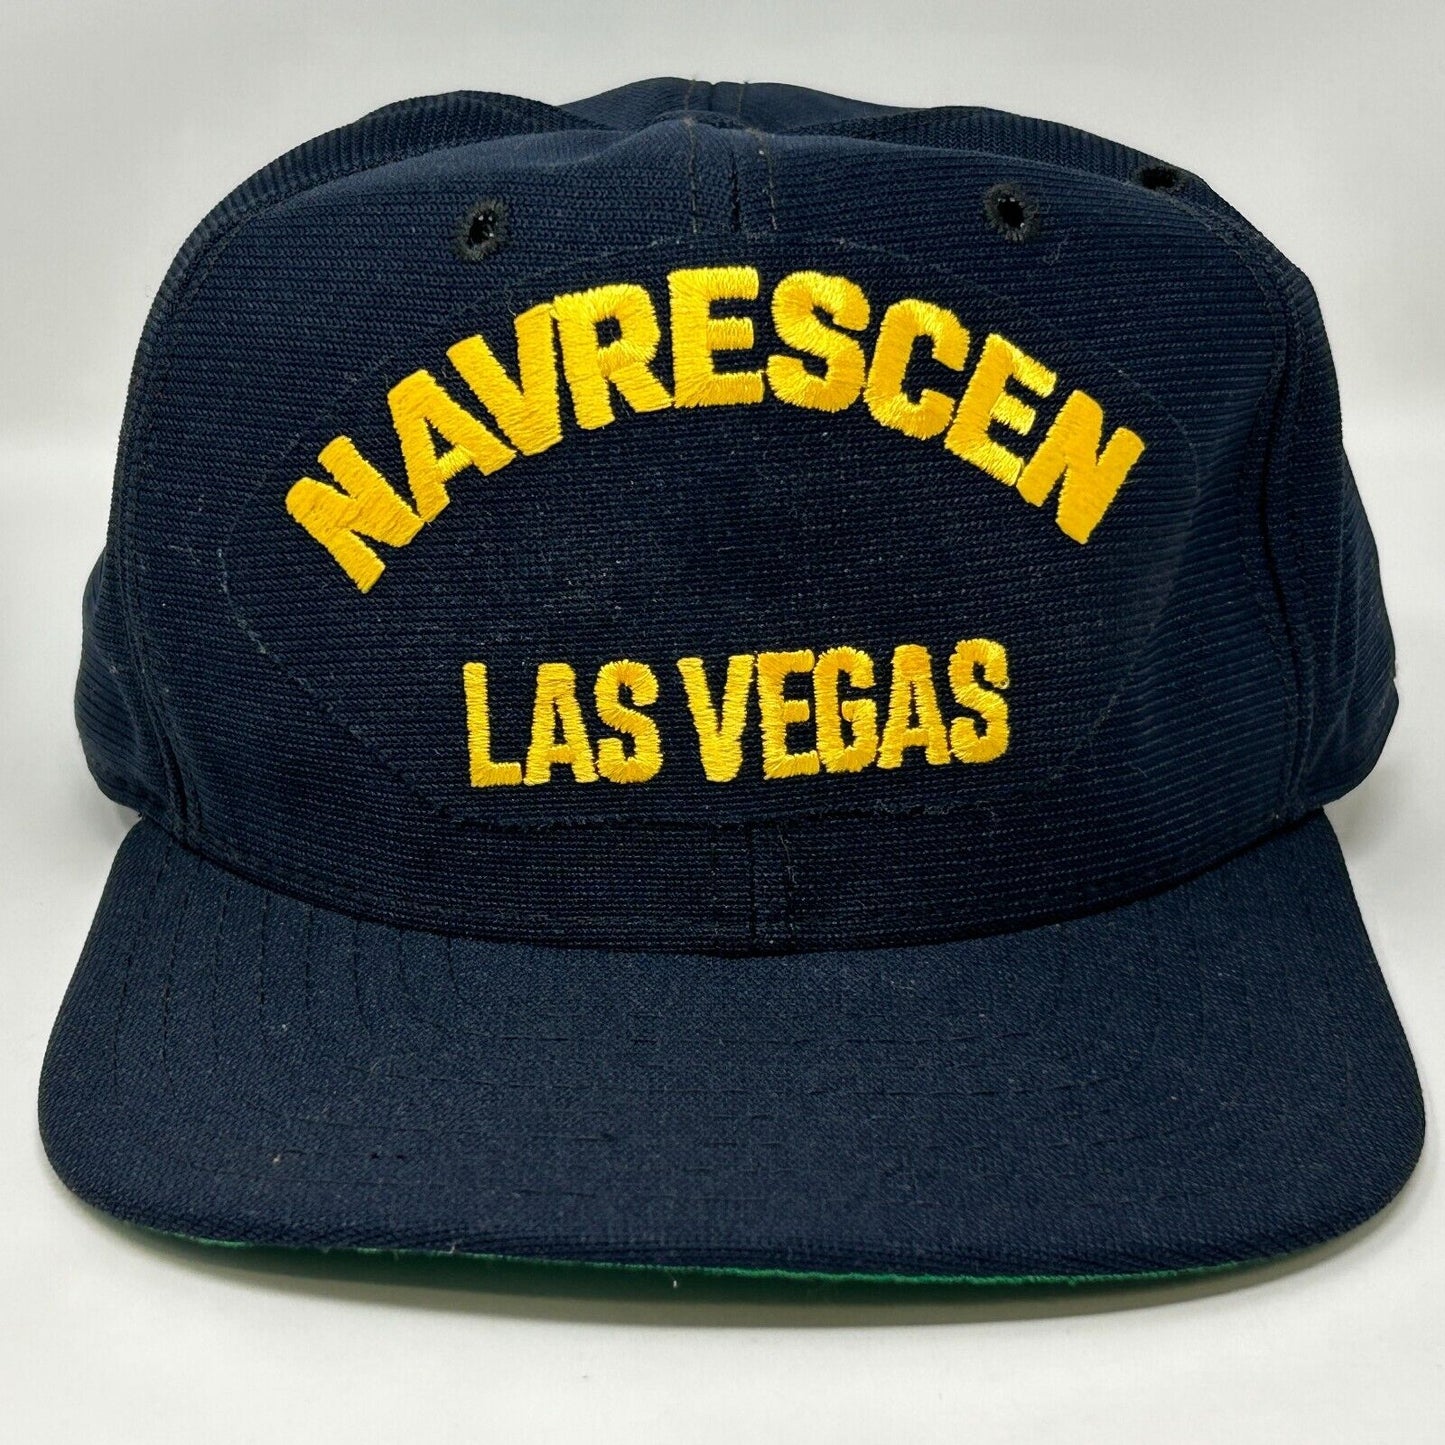 NAVRESCEN Las Vegas Naval Reserve Center Snapback Hat Vintage Navy New Era Cap